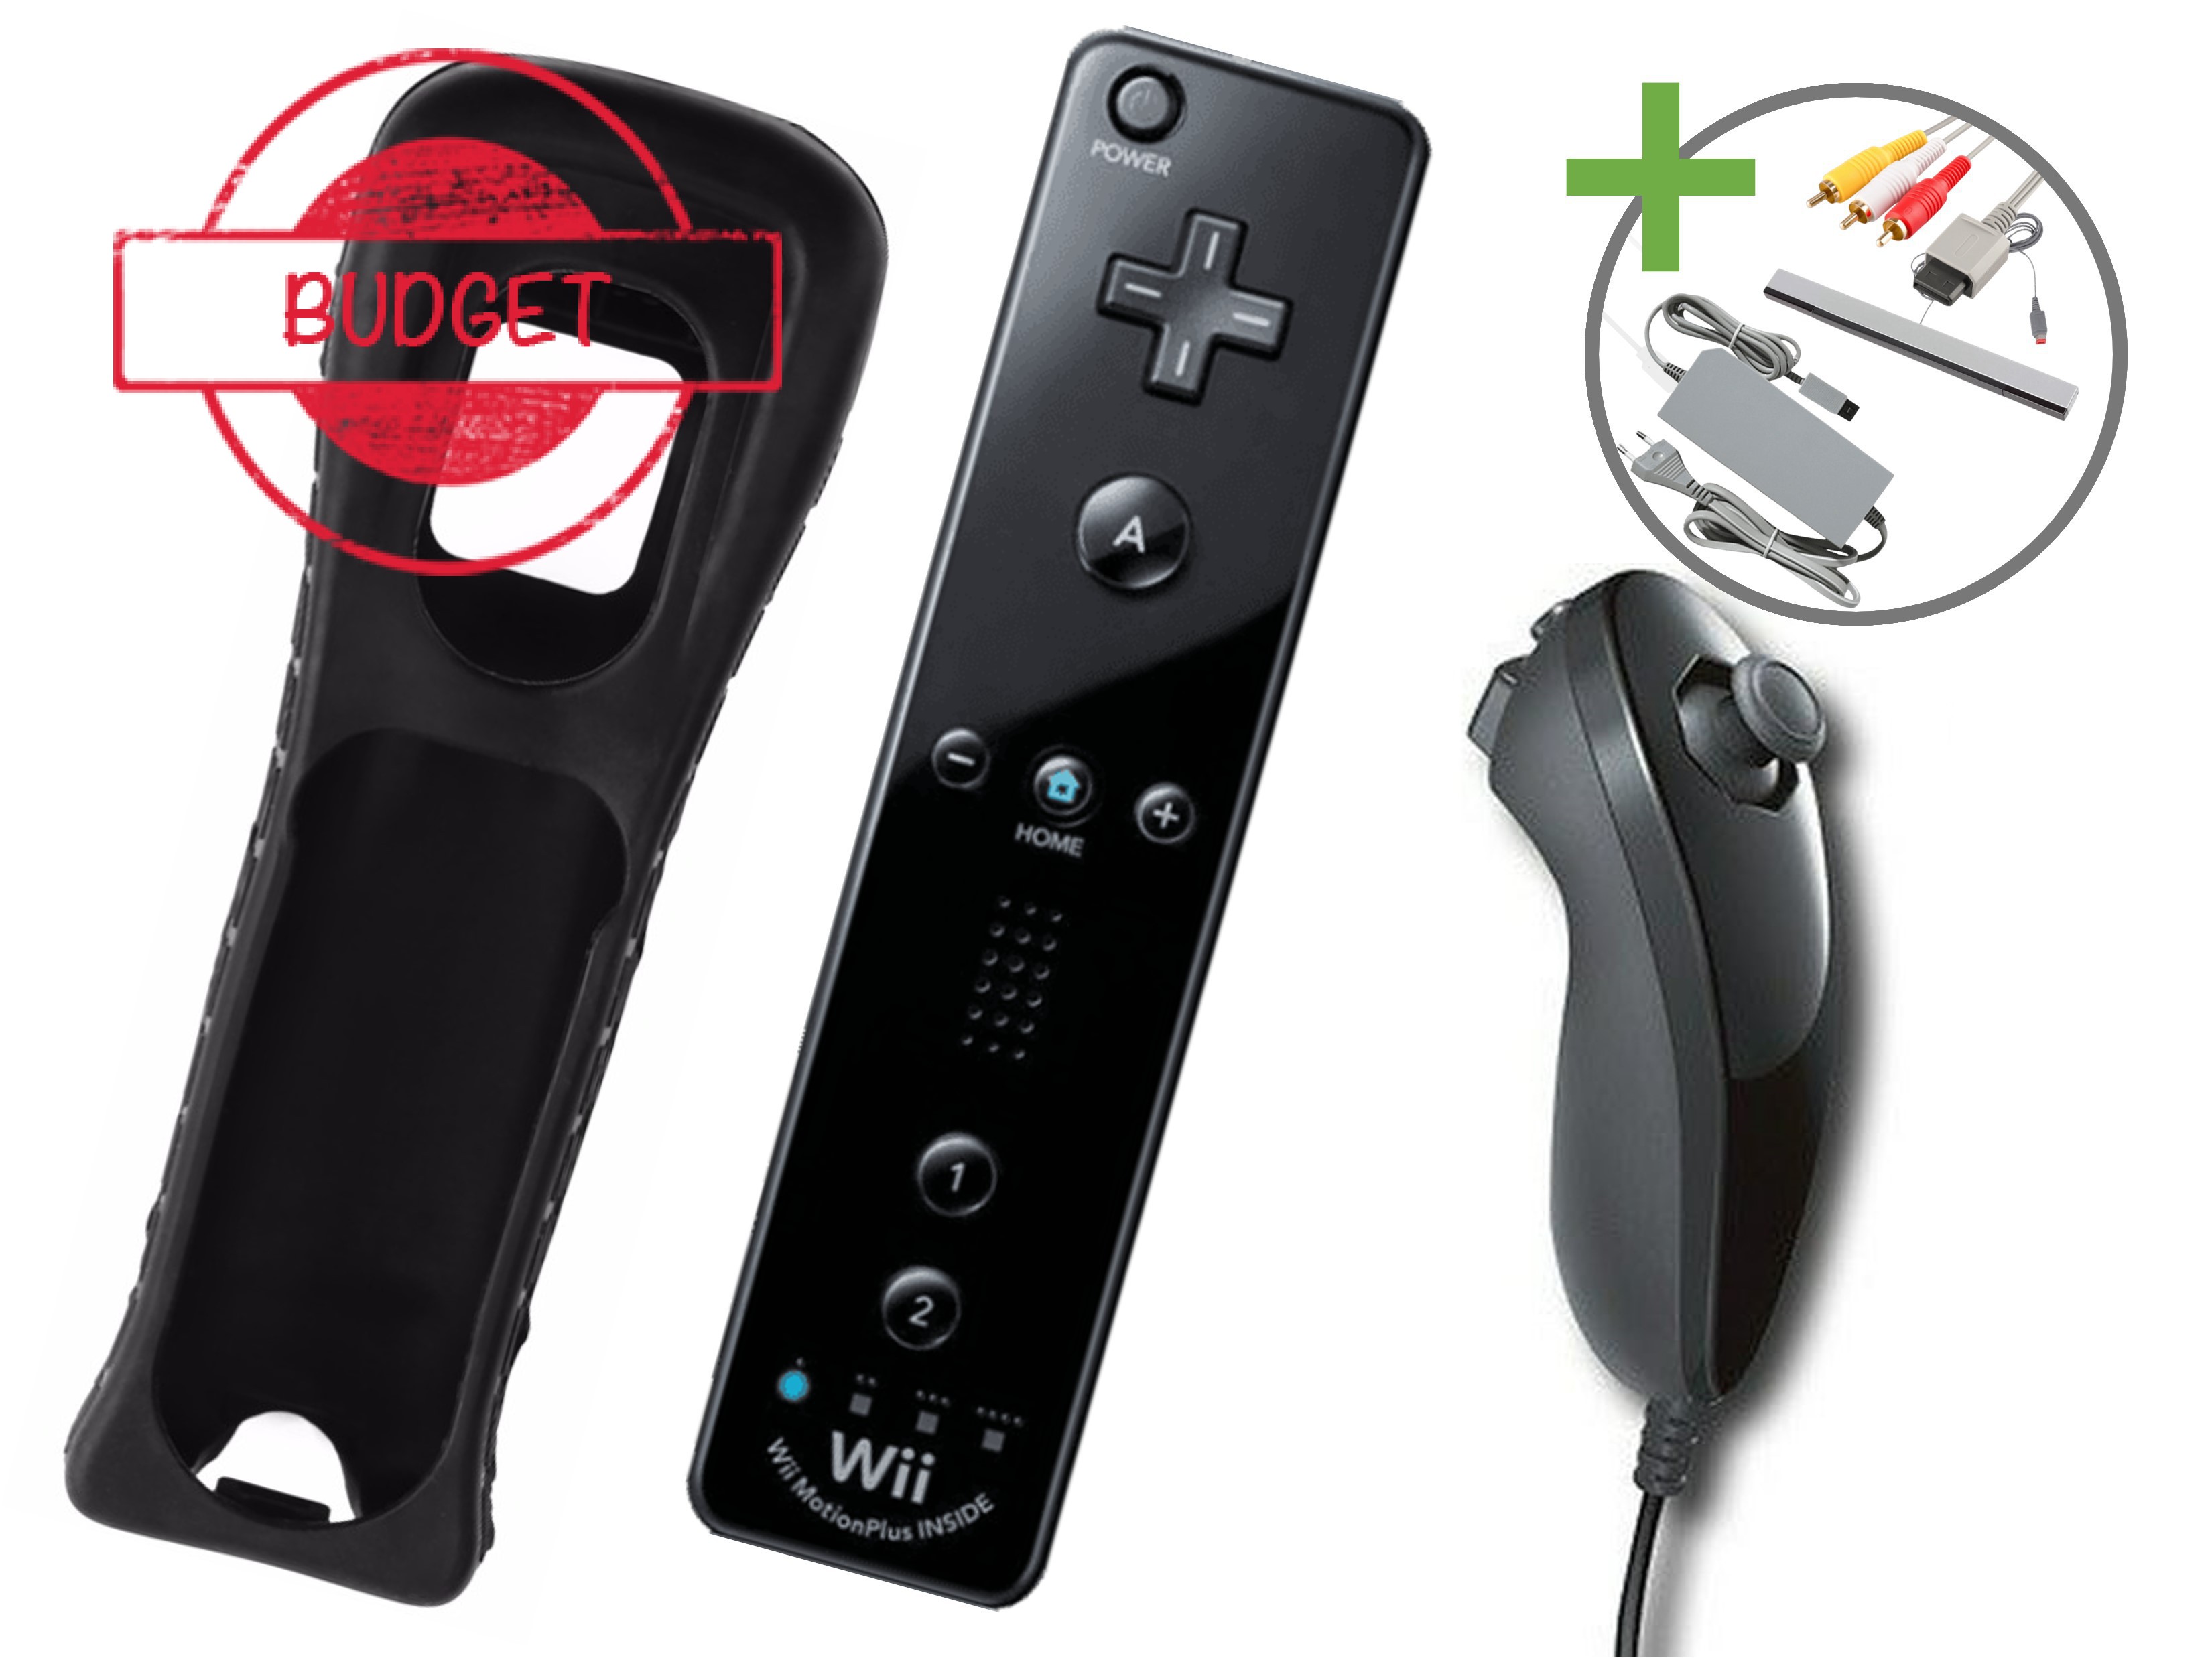 Nintendo Wii Mini Starter Pack - New Super Mario Bros. Wii Edition - Budget - Wii Hardware - 3